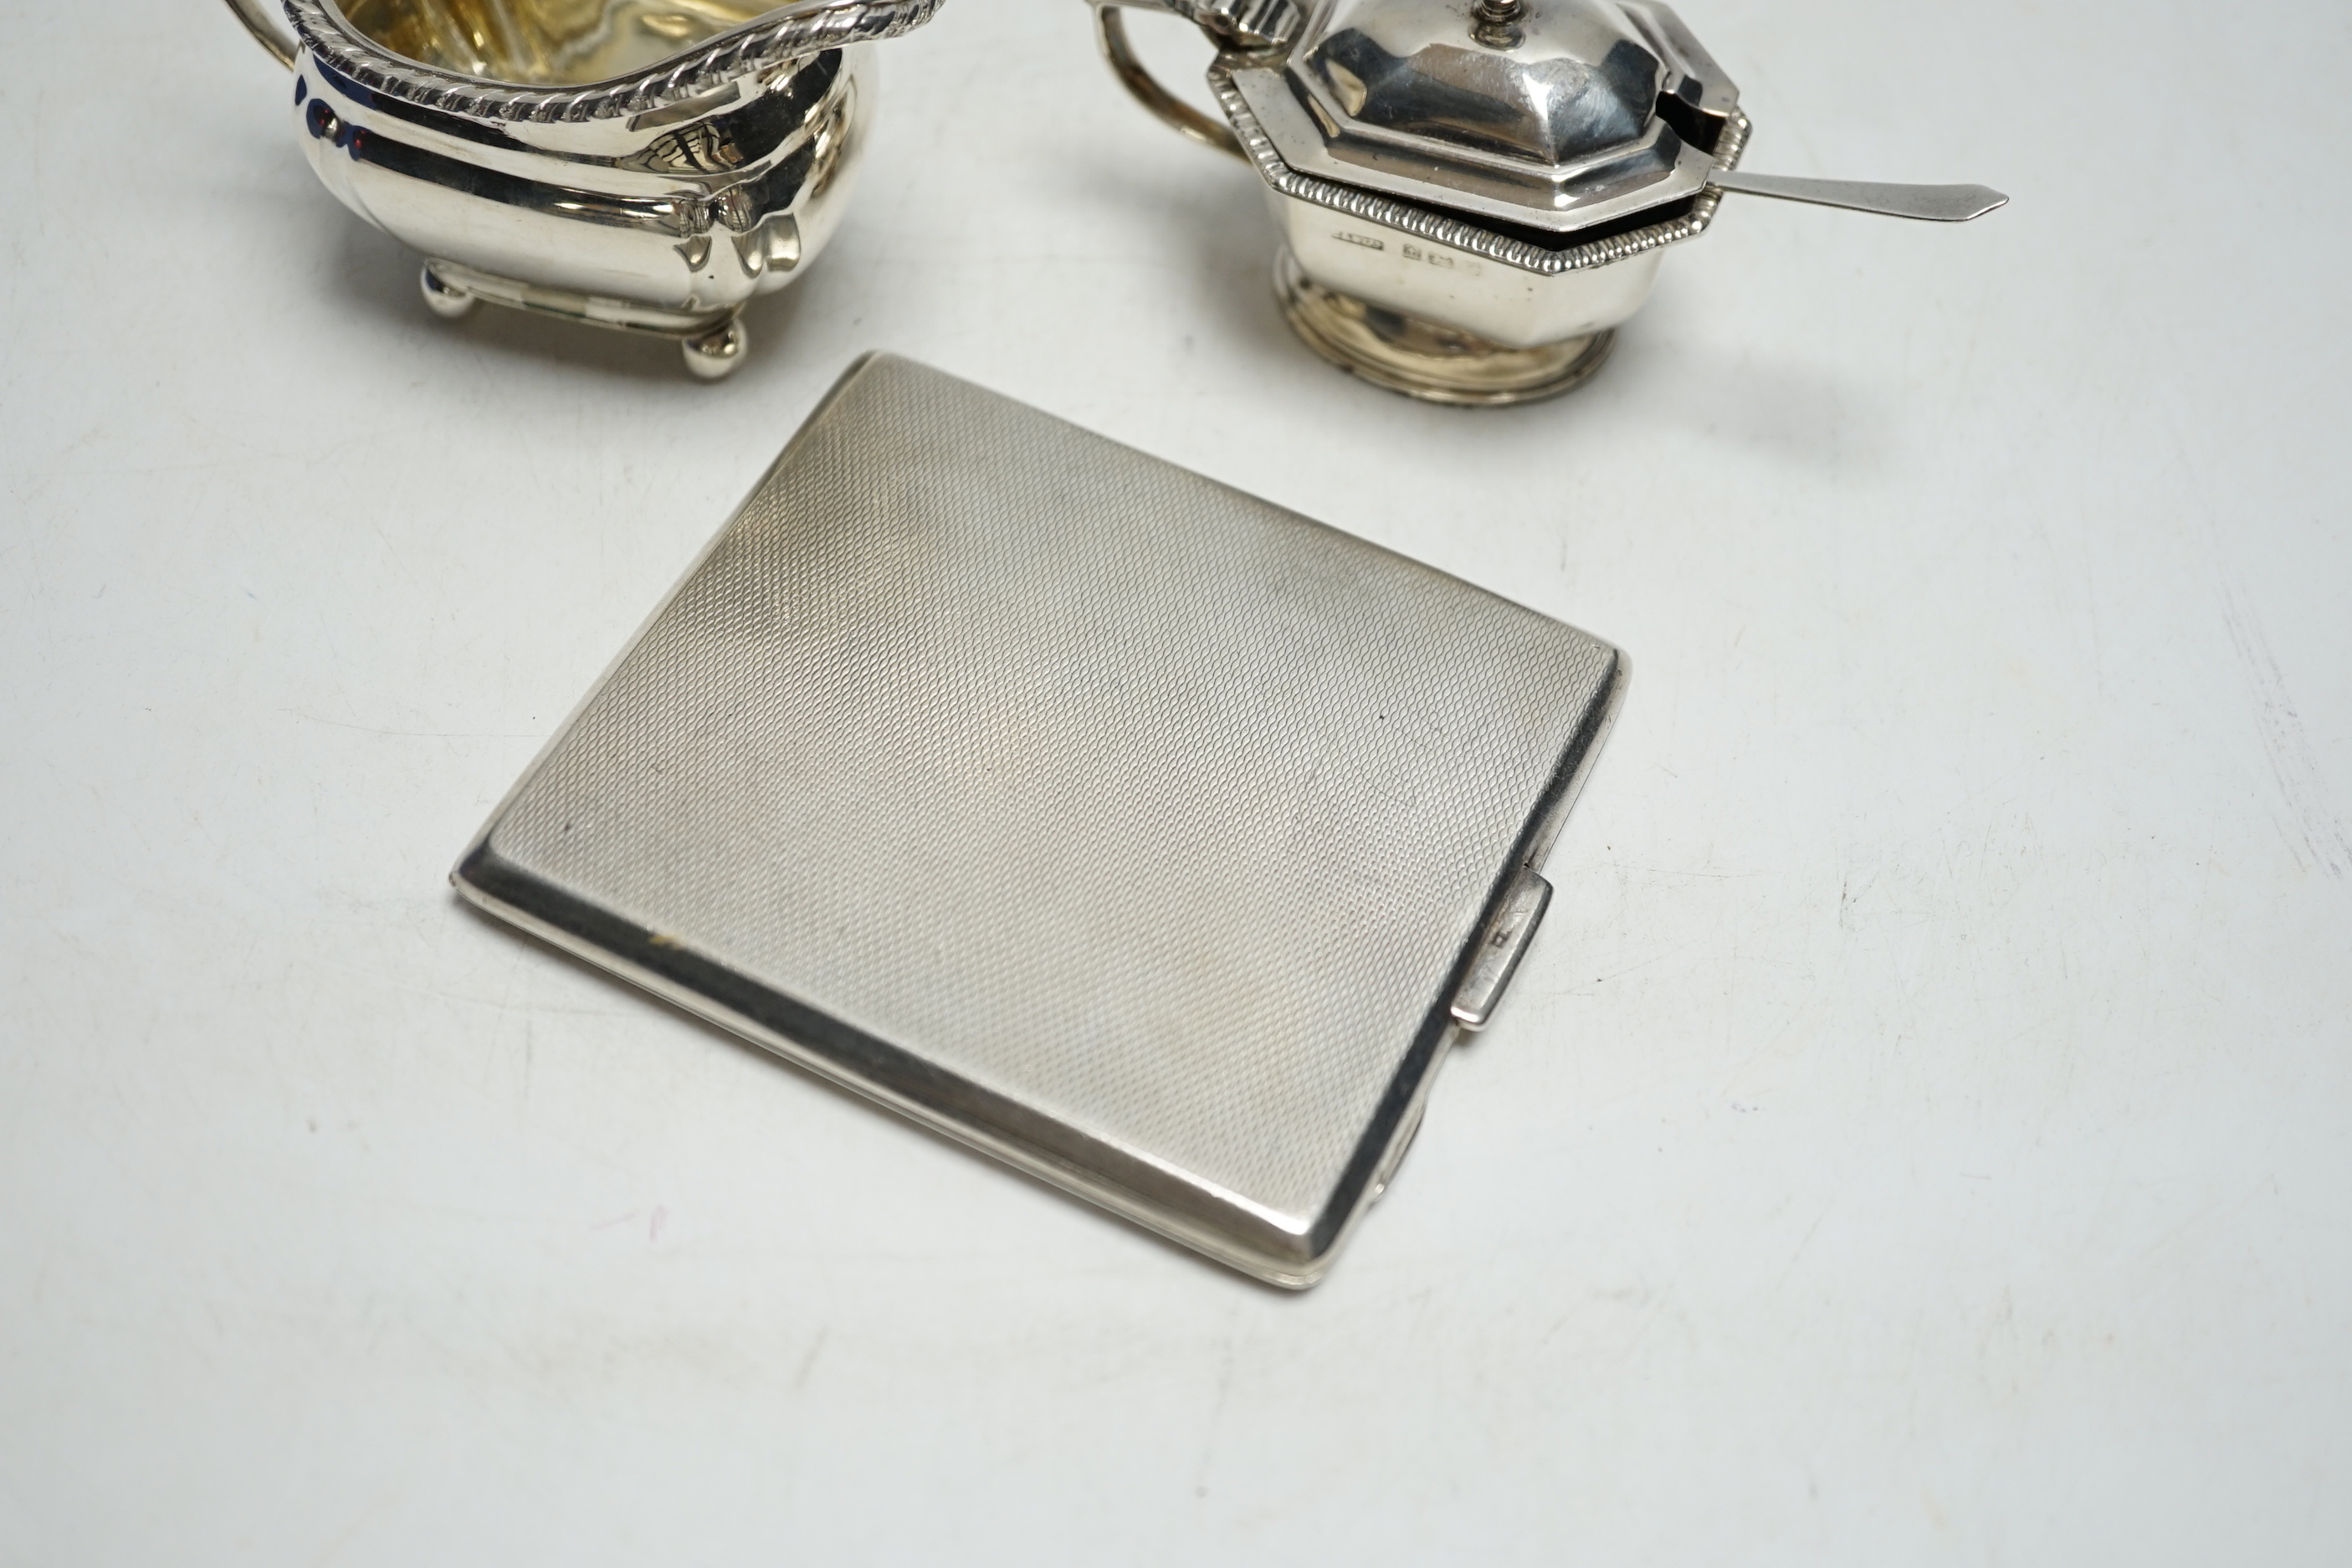 A George VI engine turned silver cigarette case, a silver lidded mustard pot and a small silver cream jug.